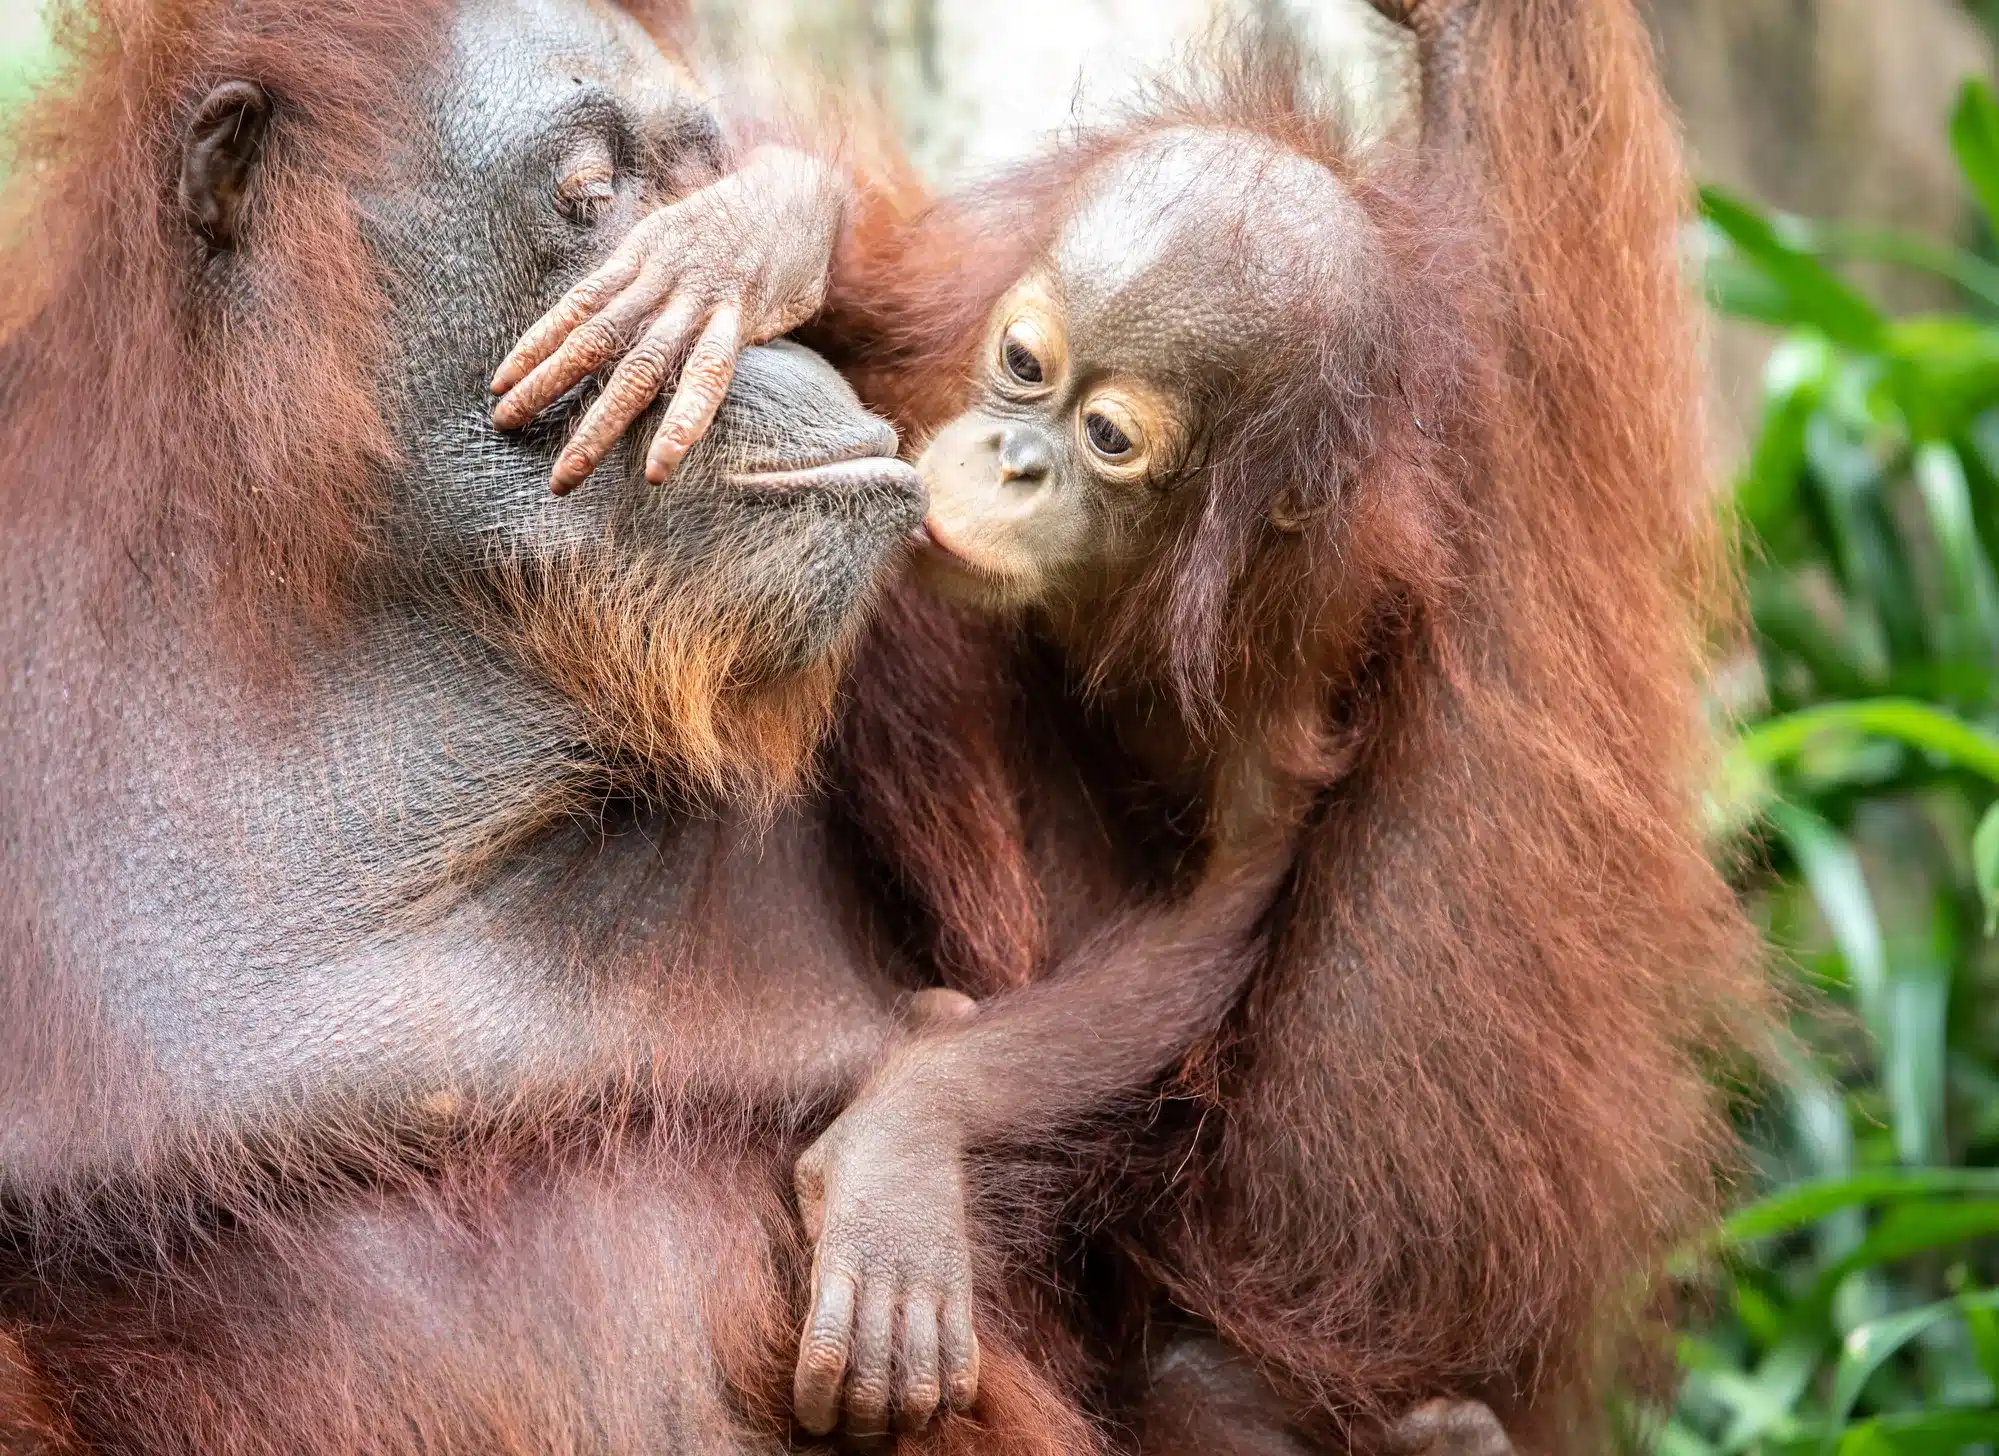 Eco turisme. Portrait of an orangutan in a rainforest.